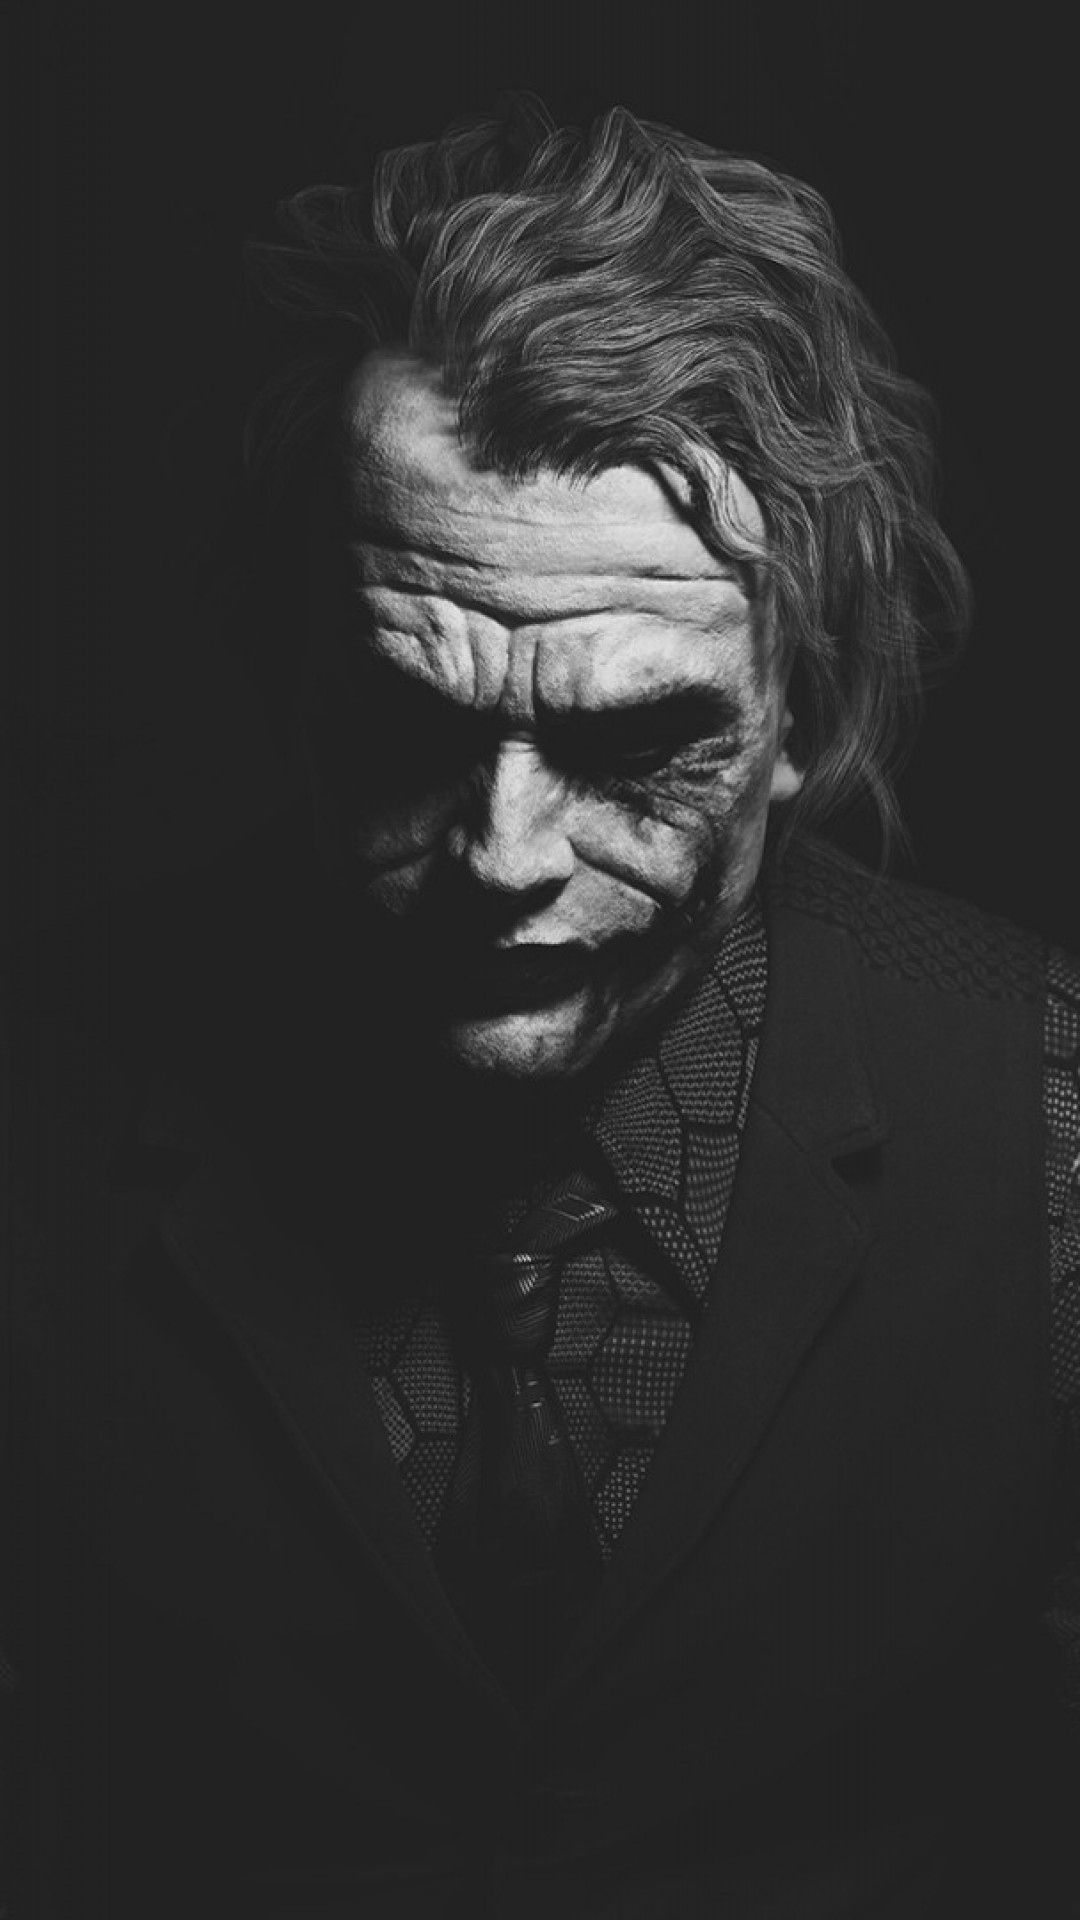 Heath Ledger Joker iPhone Wallpaper Free Heath Ledger Joker